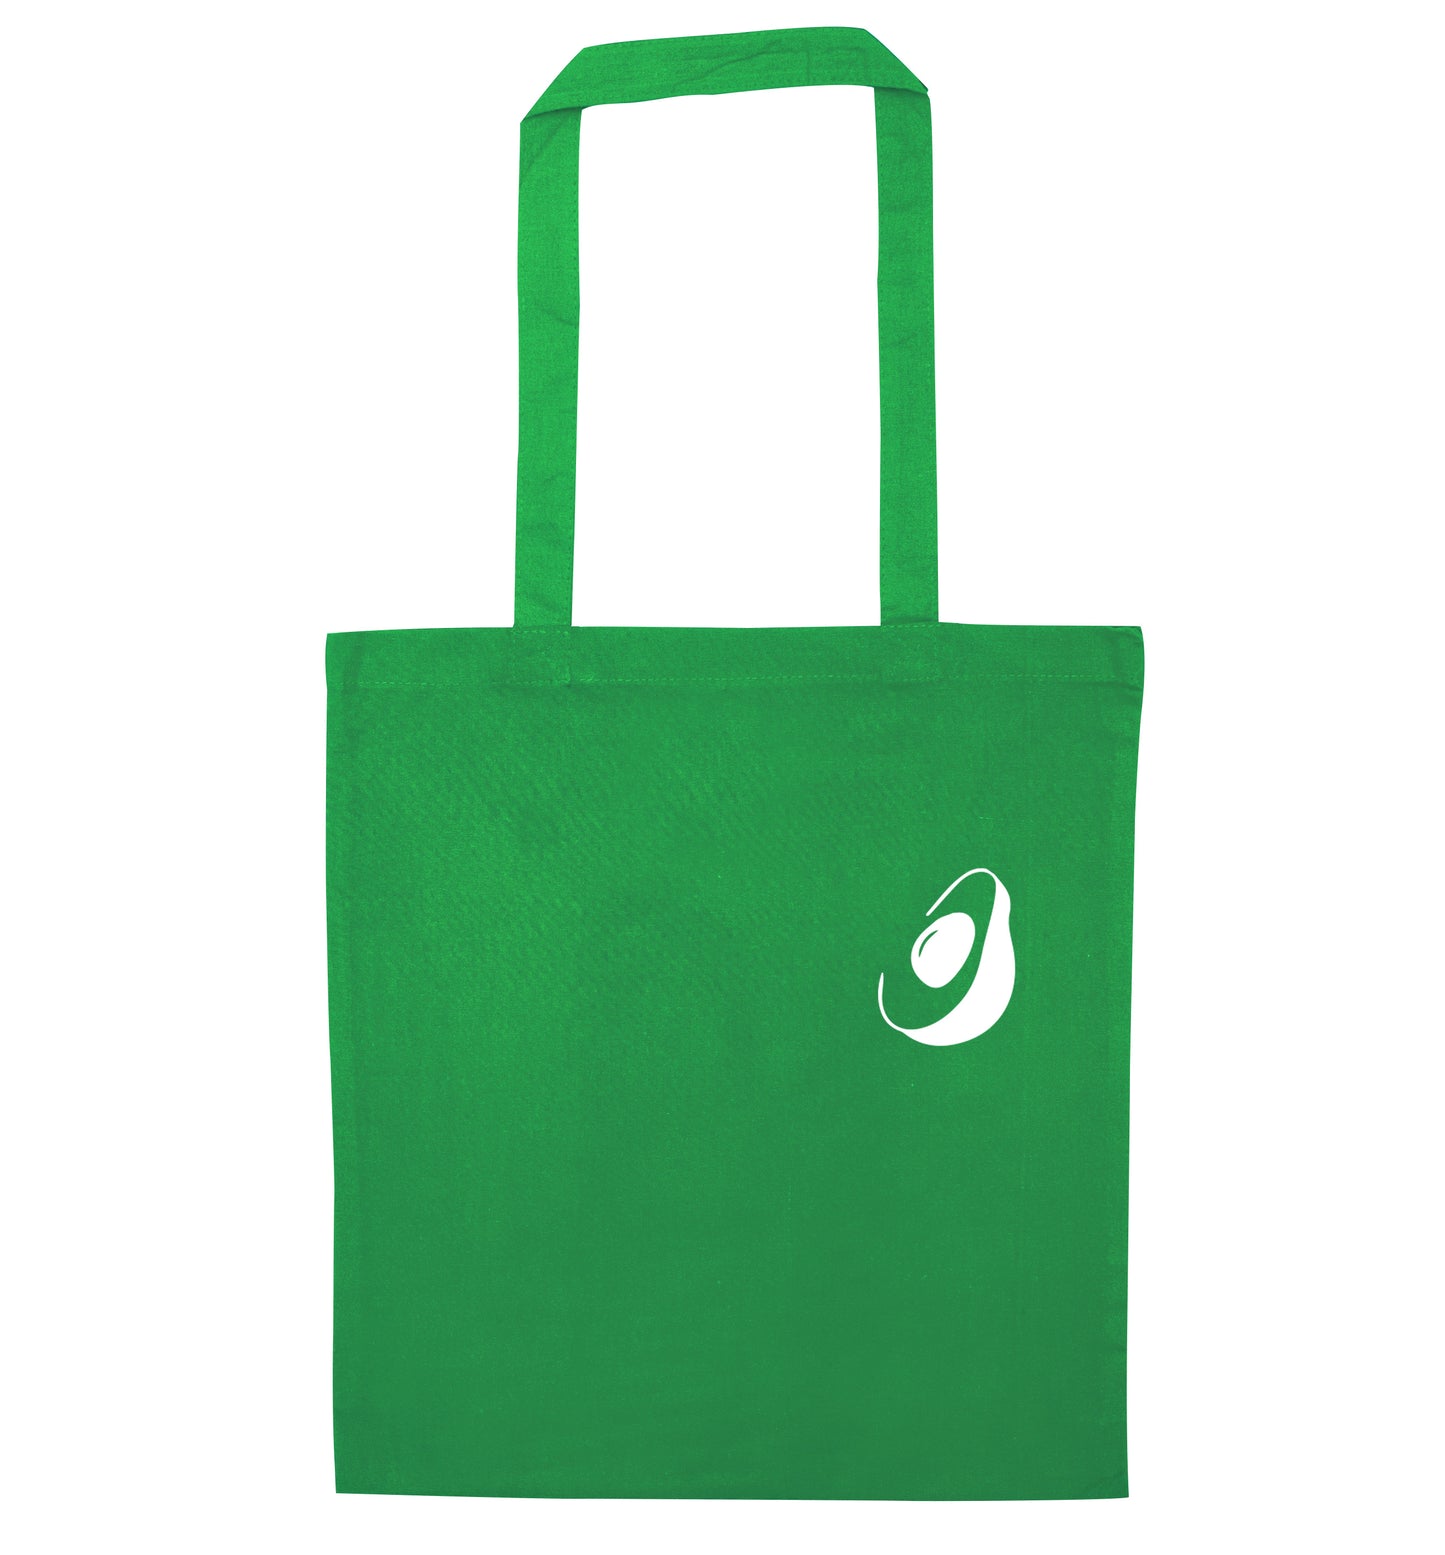 Avocado pocket green tote bag